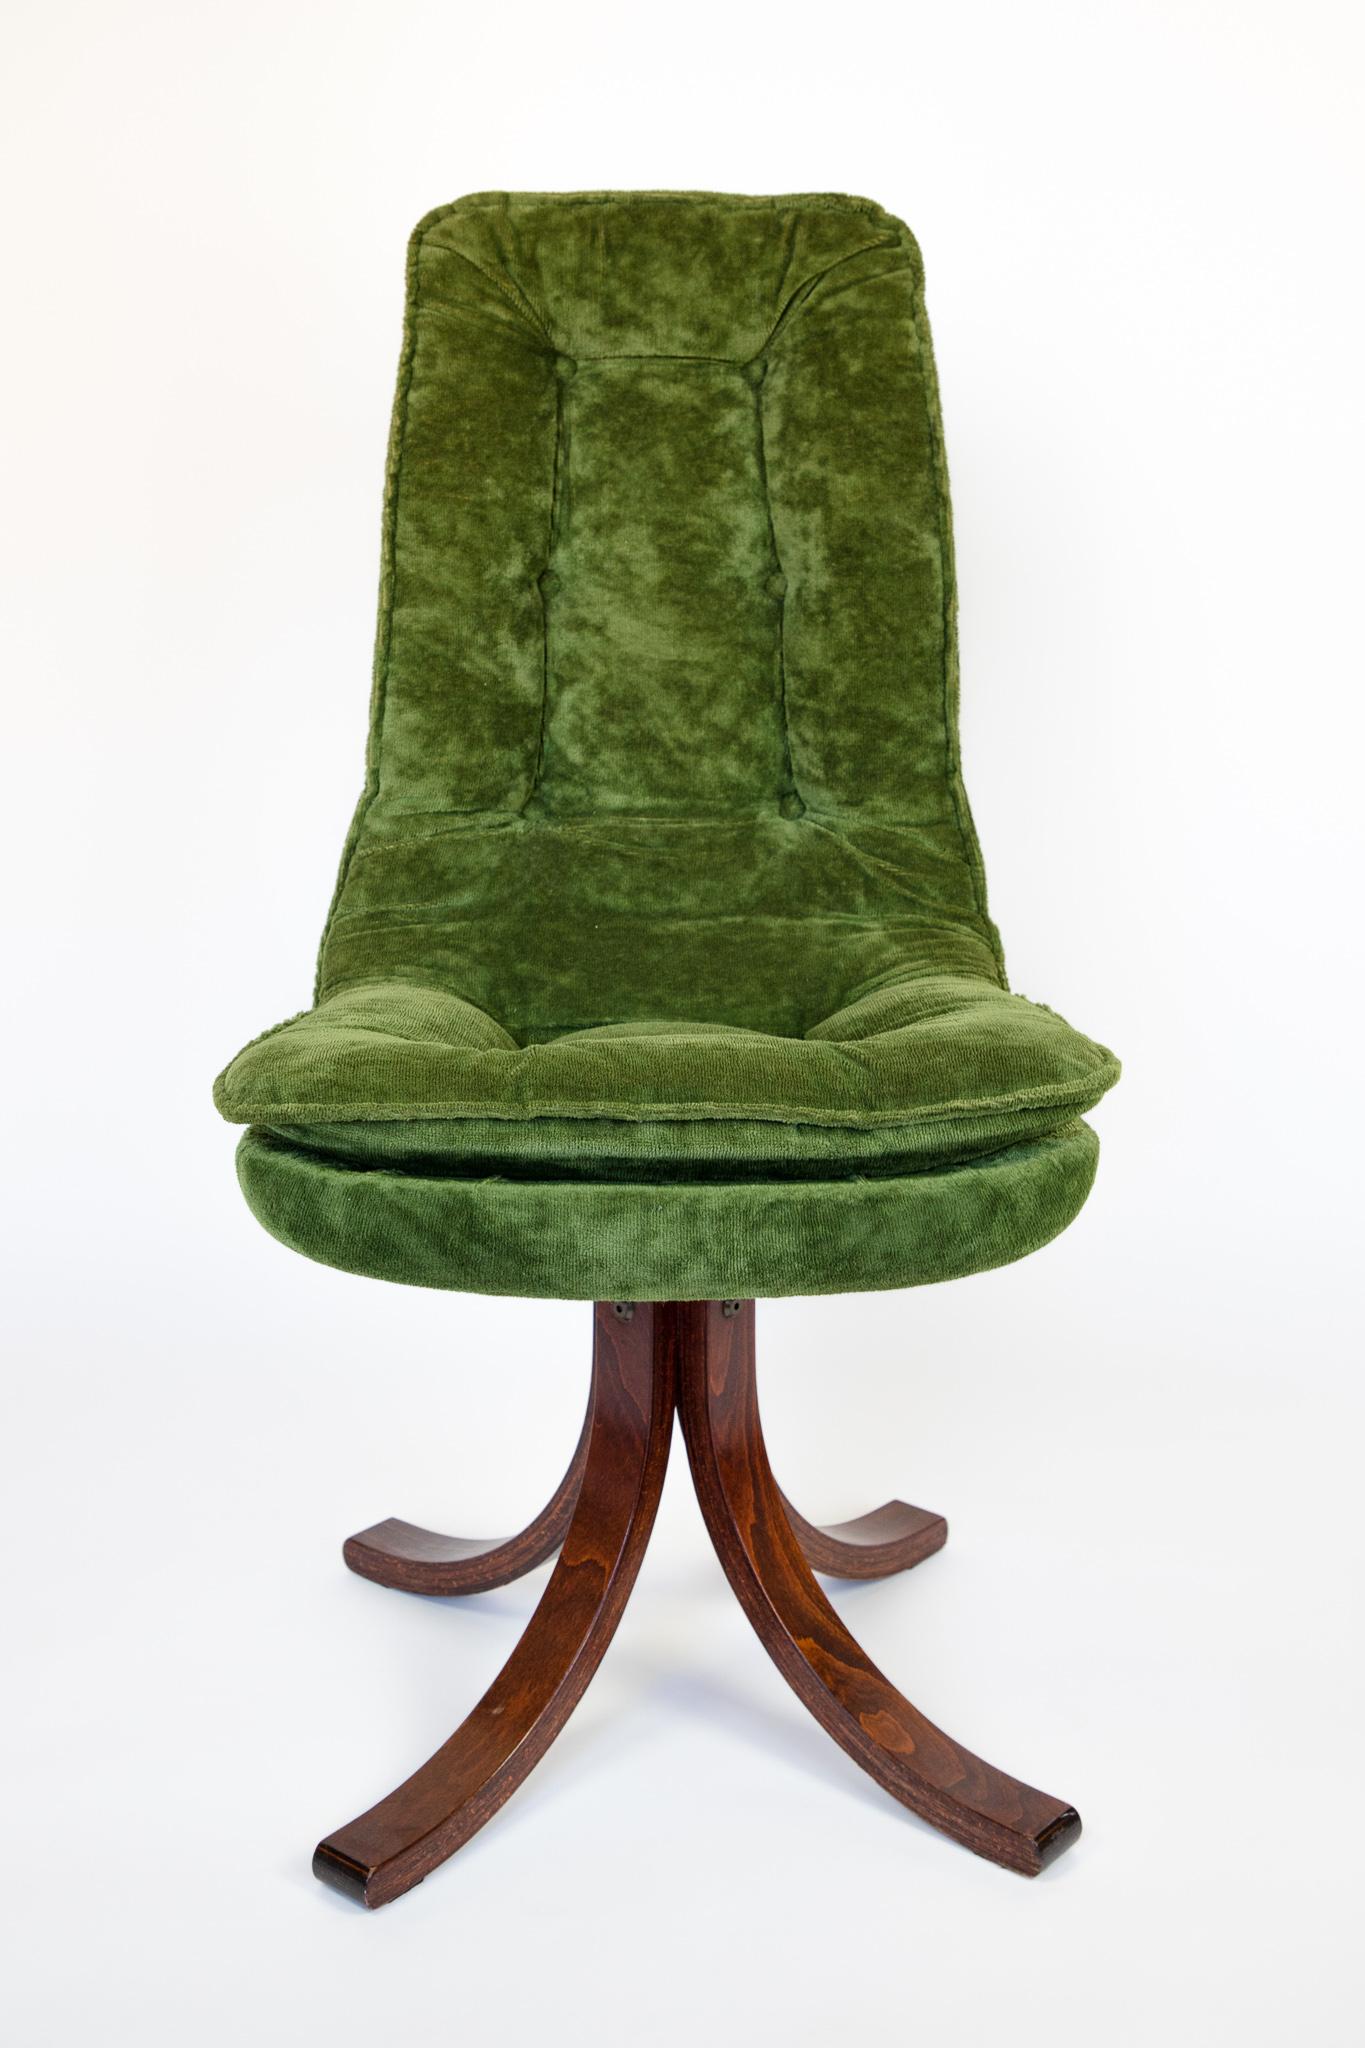 Italian Mid Century Modern Dining Chairs in Green Velvet Upholstery, Italy, 1970s